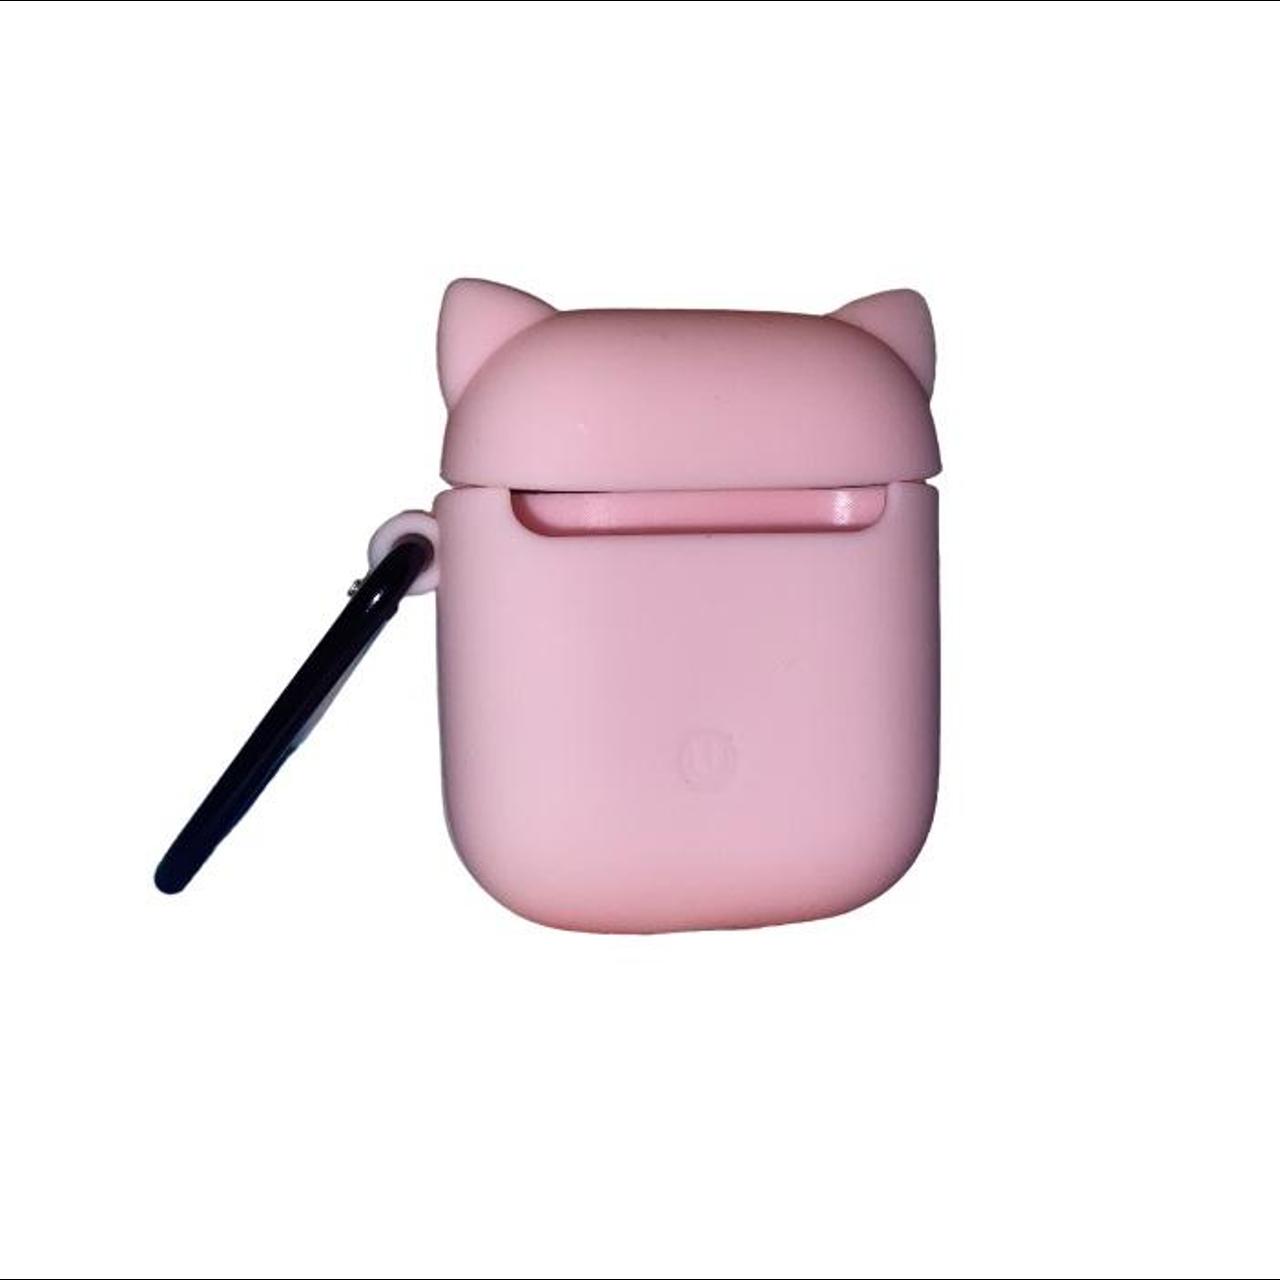 Hello Kitty AirPod Case - Gurl Cases